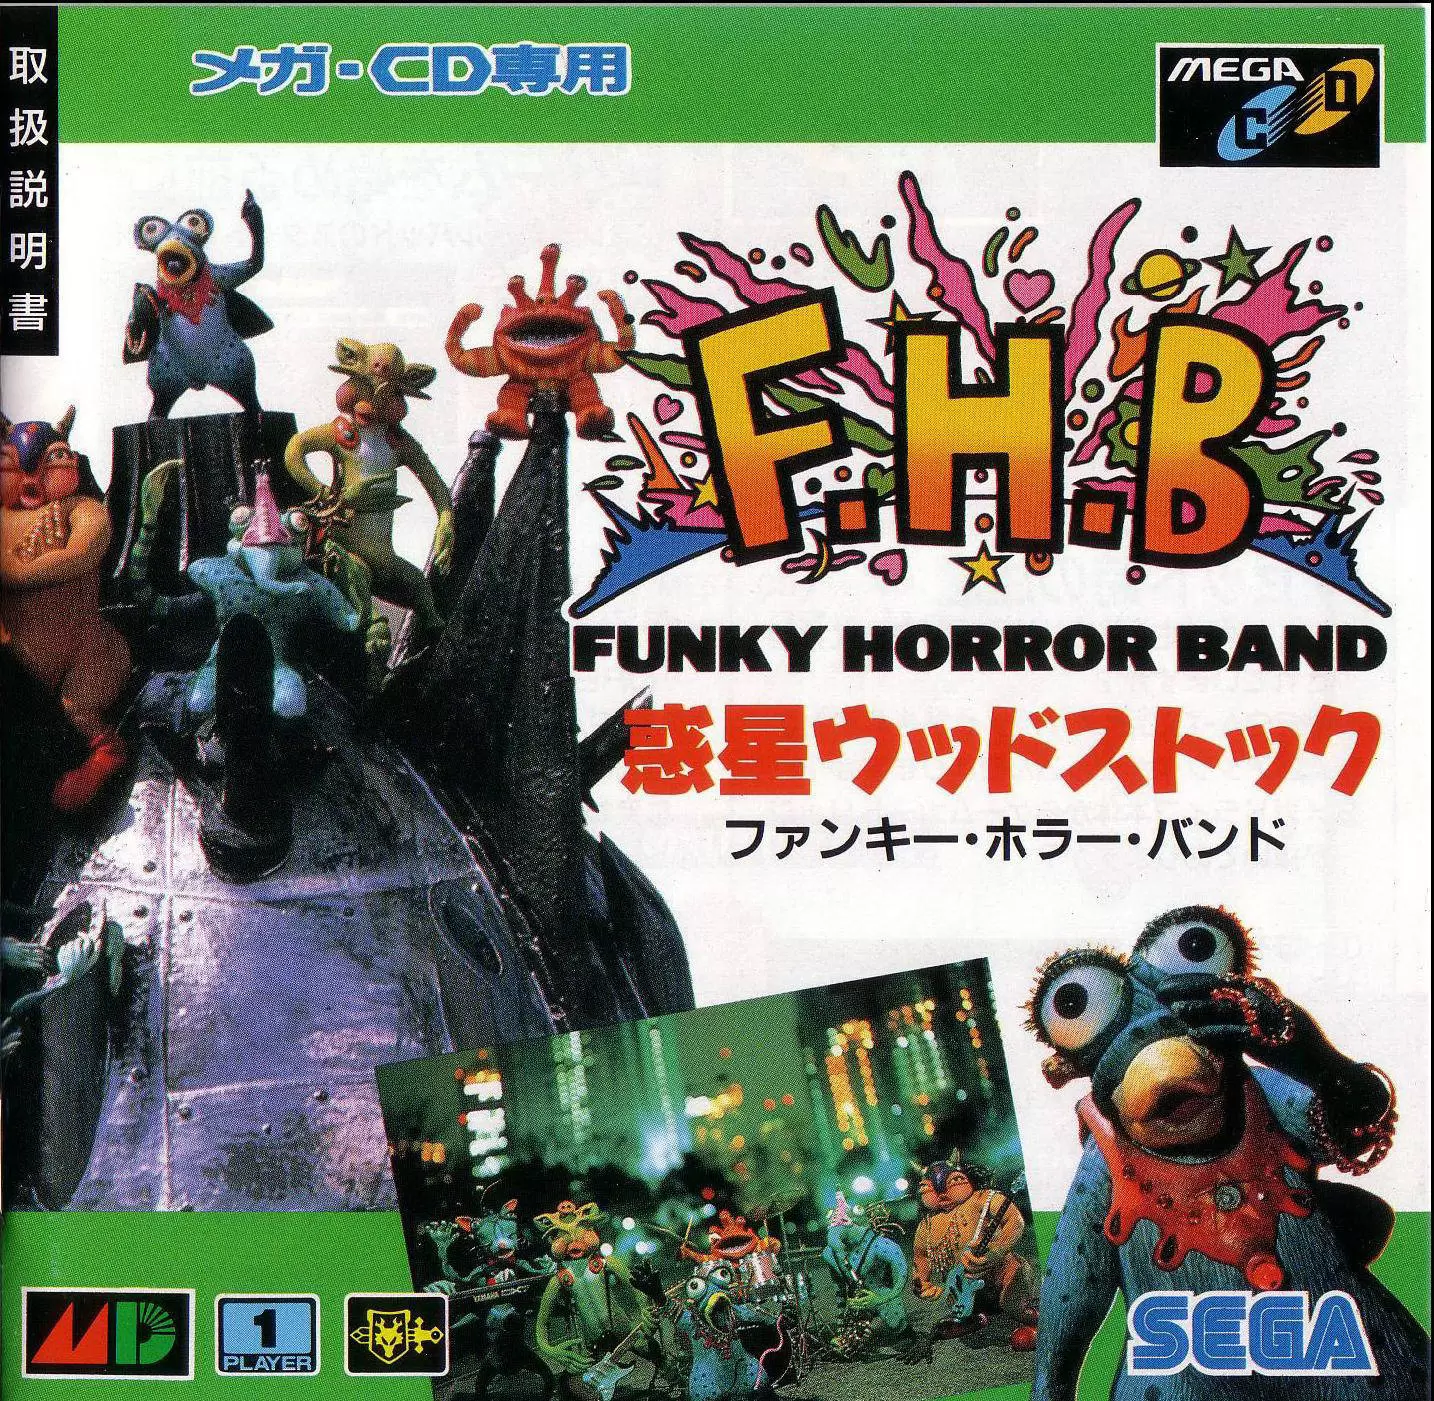 SEGA Mega CD Games - Funky Horror Band